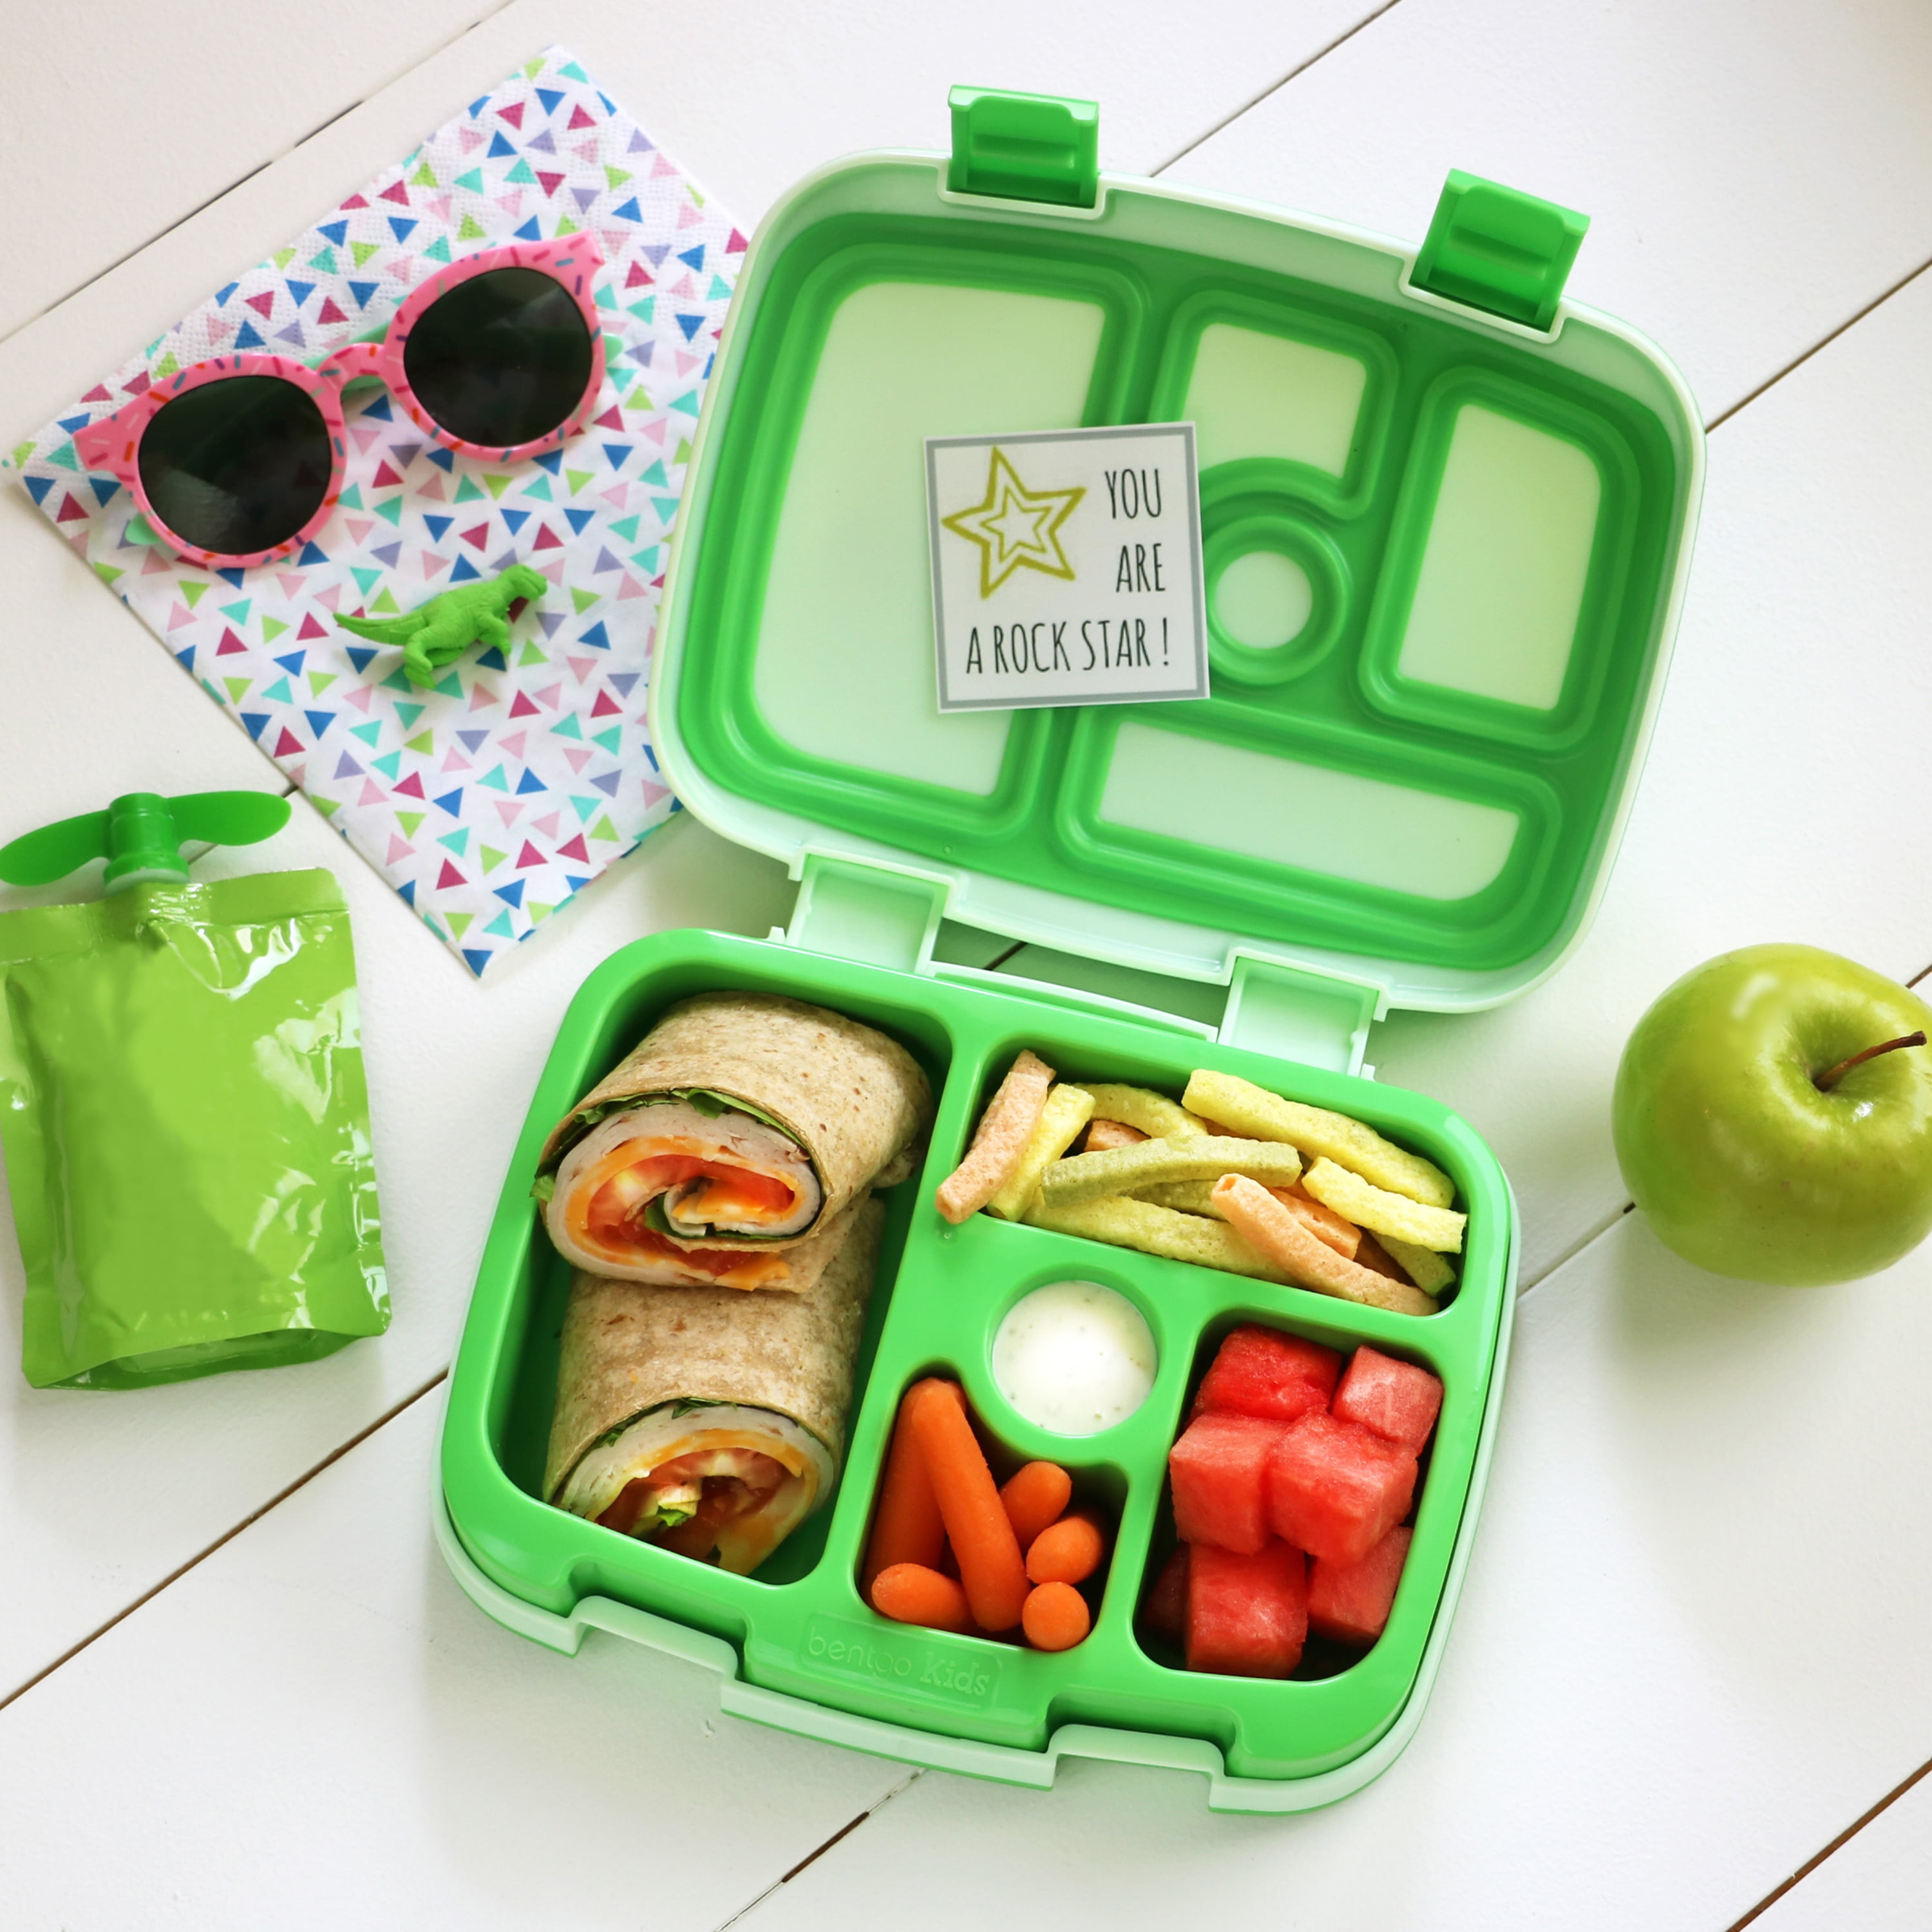 Buy Bentgo Kids Leak-proof Bento Lunch Box - Green – Biome New